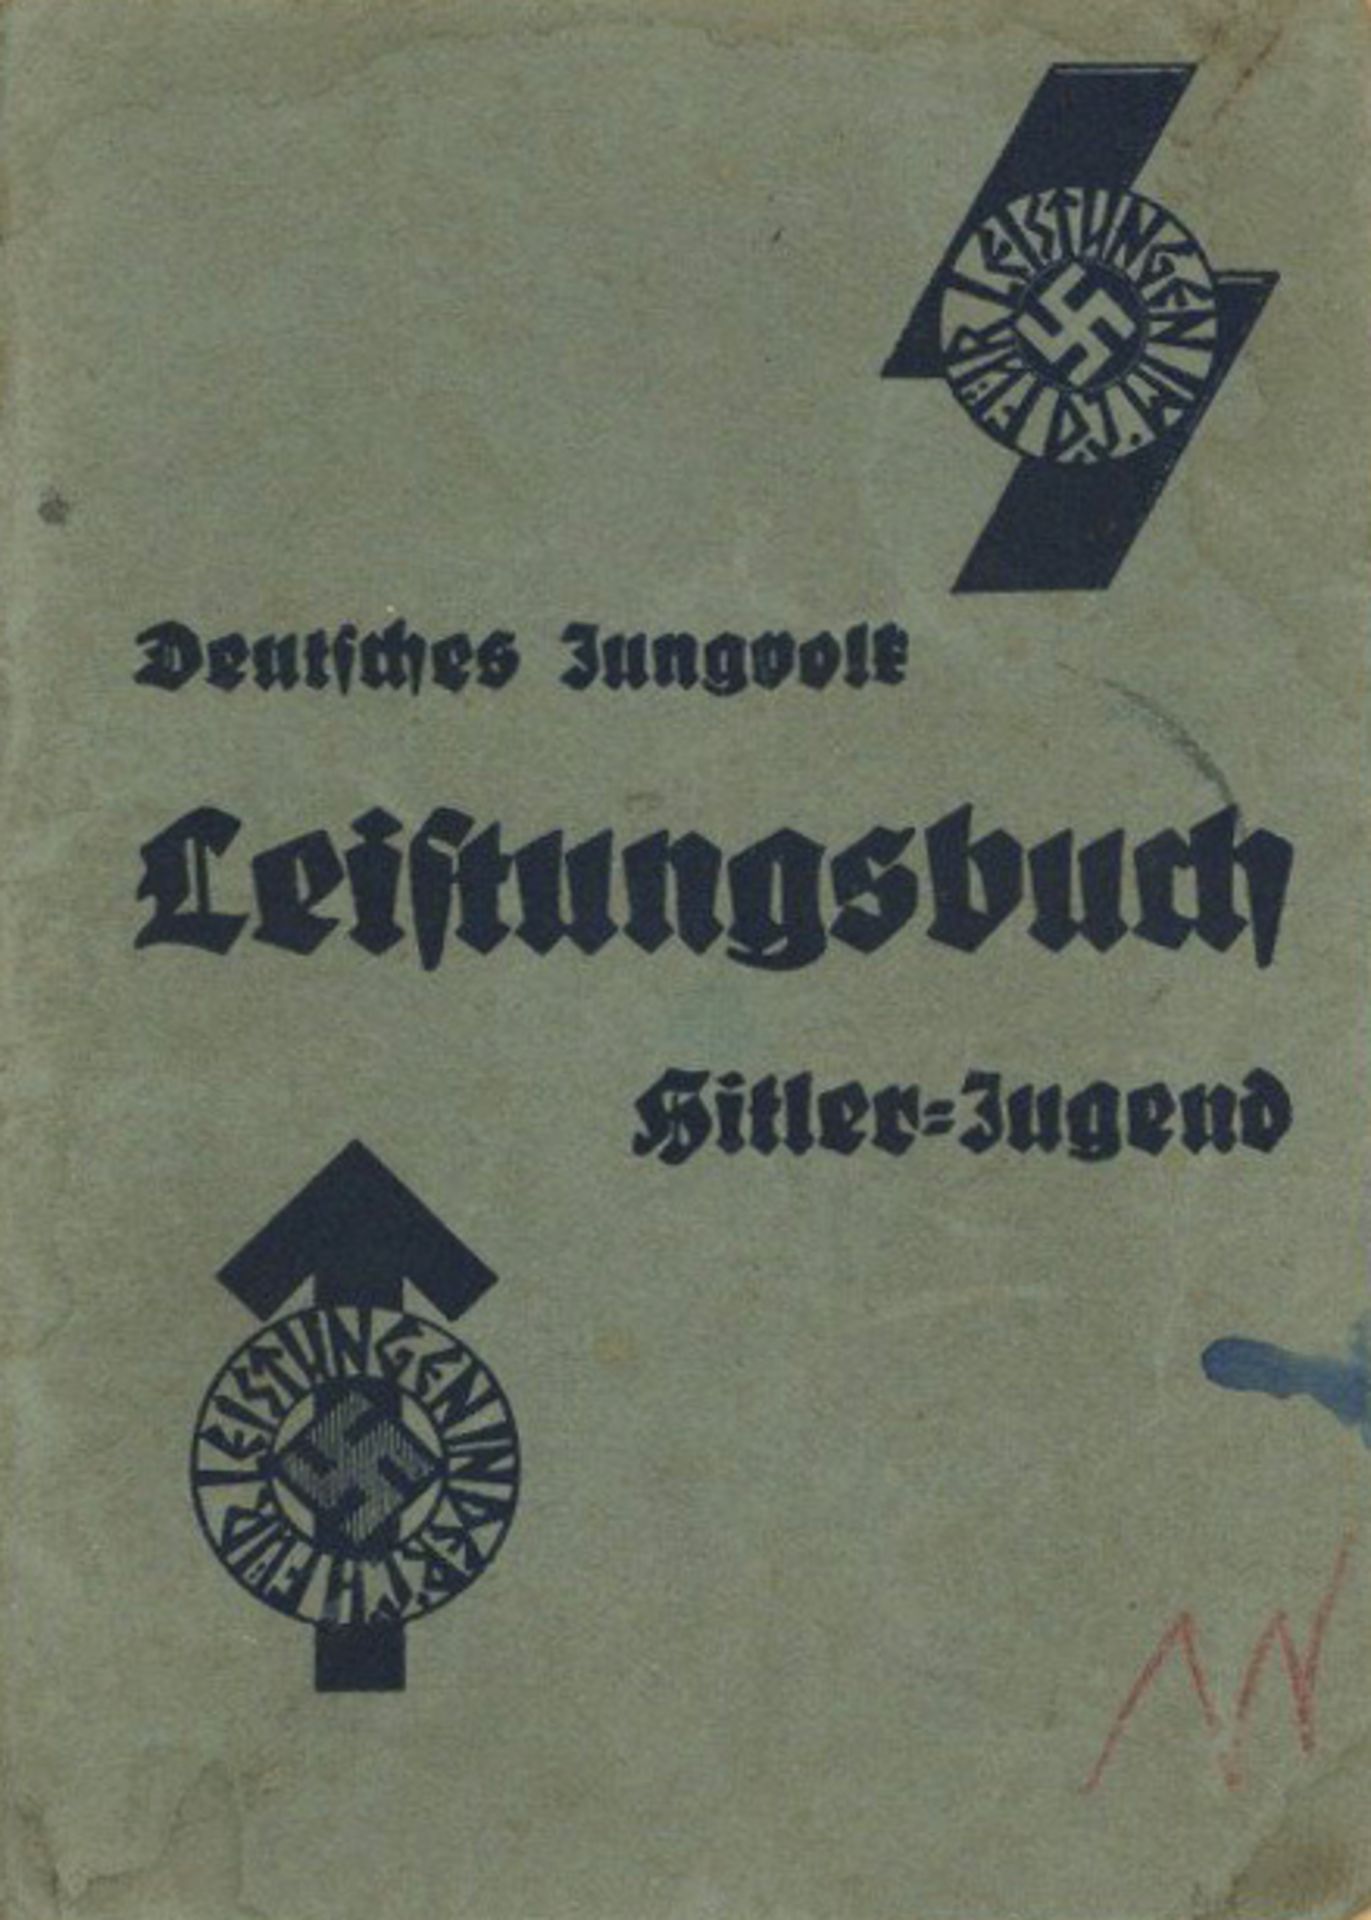 WK II HJ Heft Deutsches Jungvolk Leistungsbuch Hitler-Jugend 1940 II